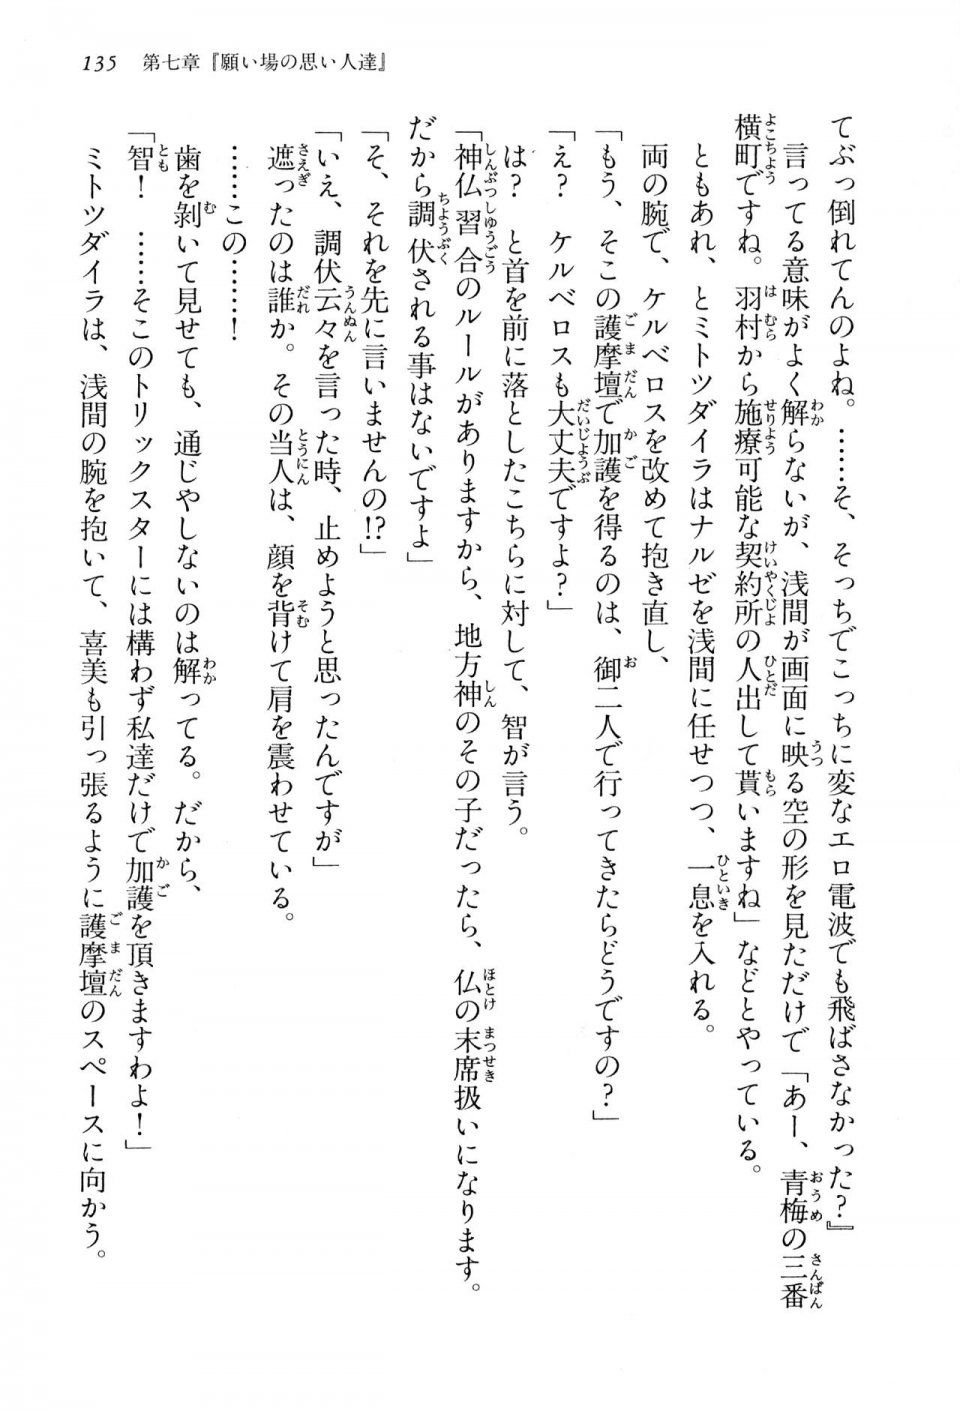 Kyoukai Senjou no Horizon BD Special Mininovel Vol 2(1B) - Photo #139